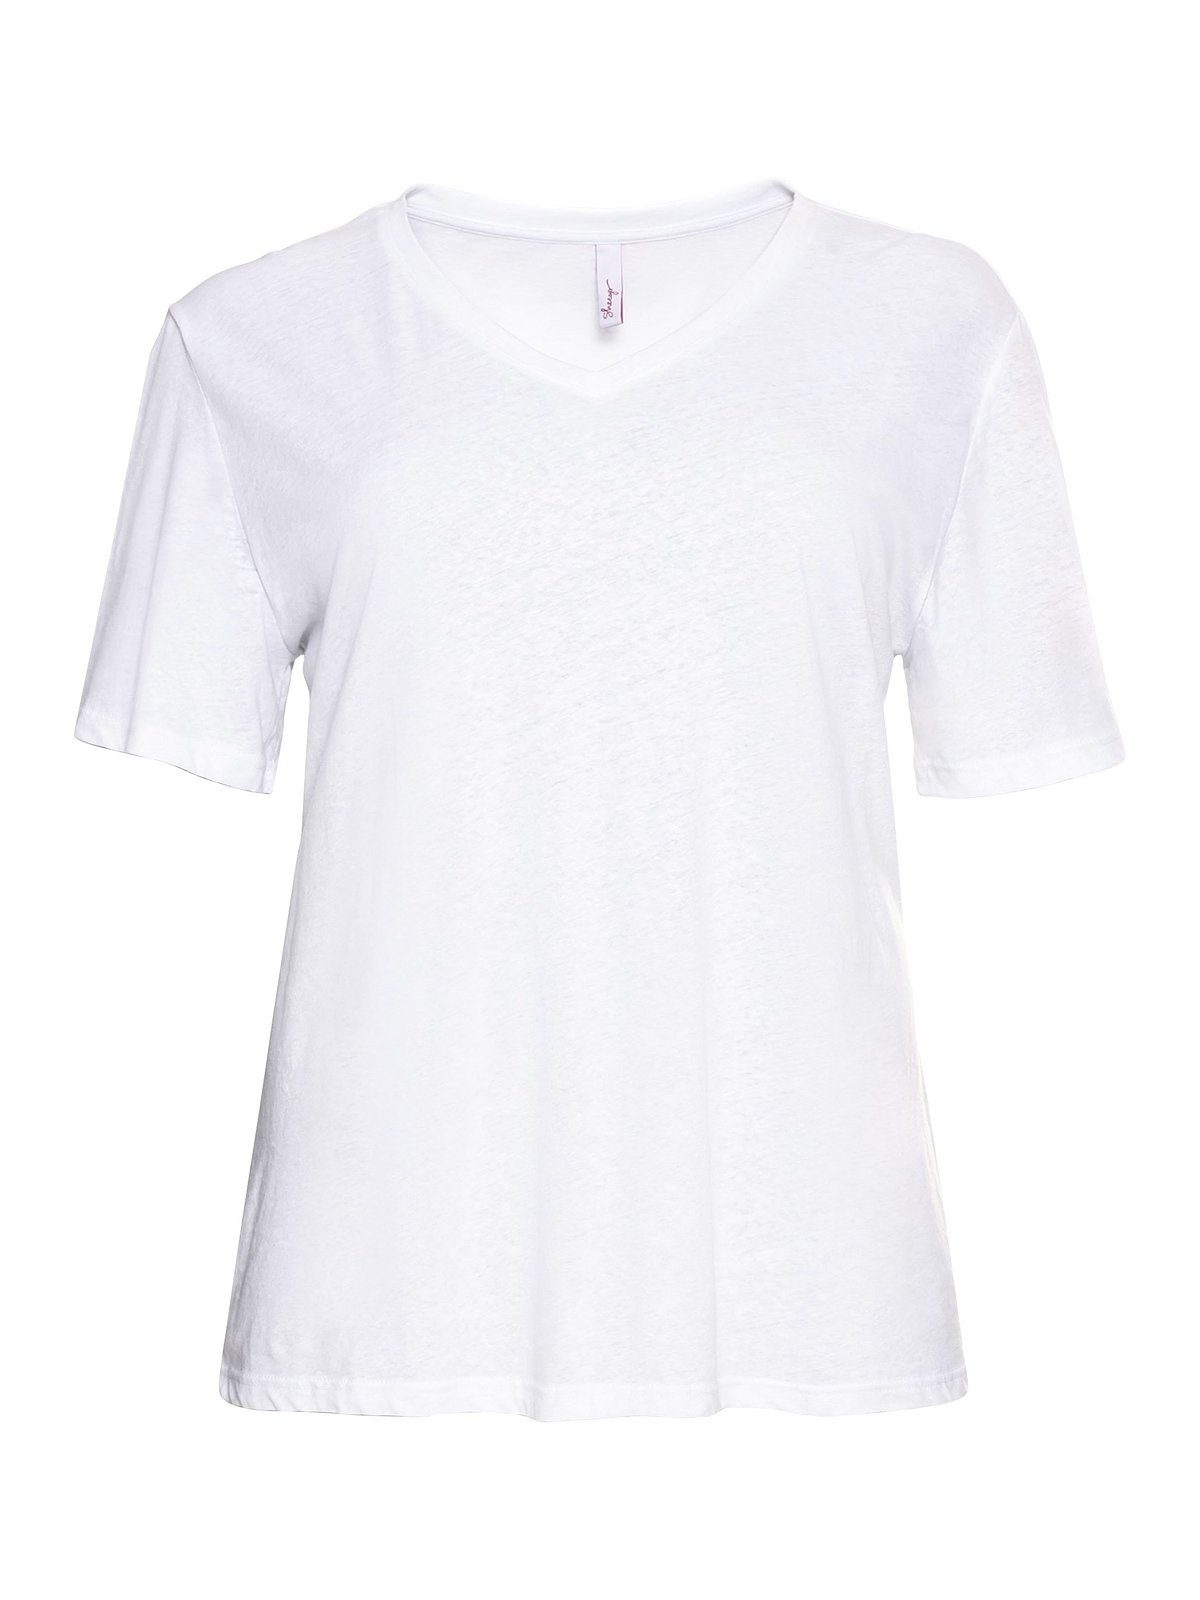 Sheego T-Shirt Große aus edlem Leinen-Viskose-Mix weiß Größen